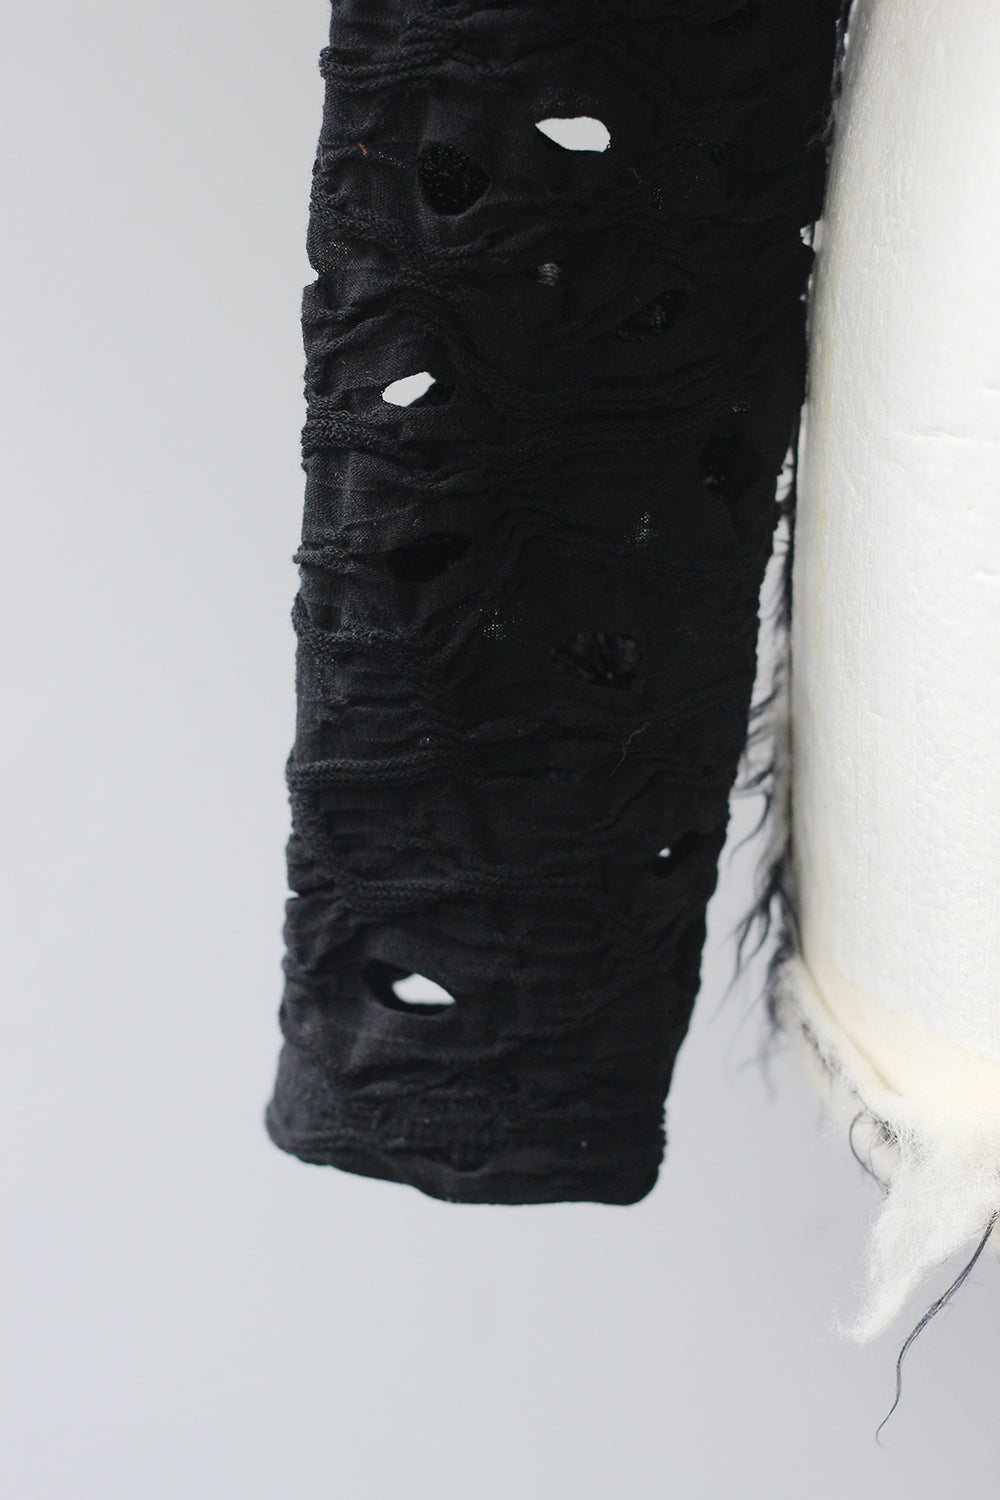 ERiKO KATORi "hole cotton cardigan" (black)